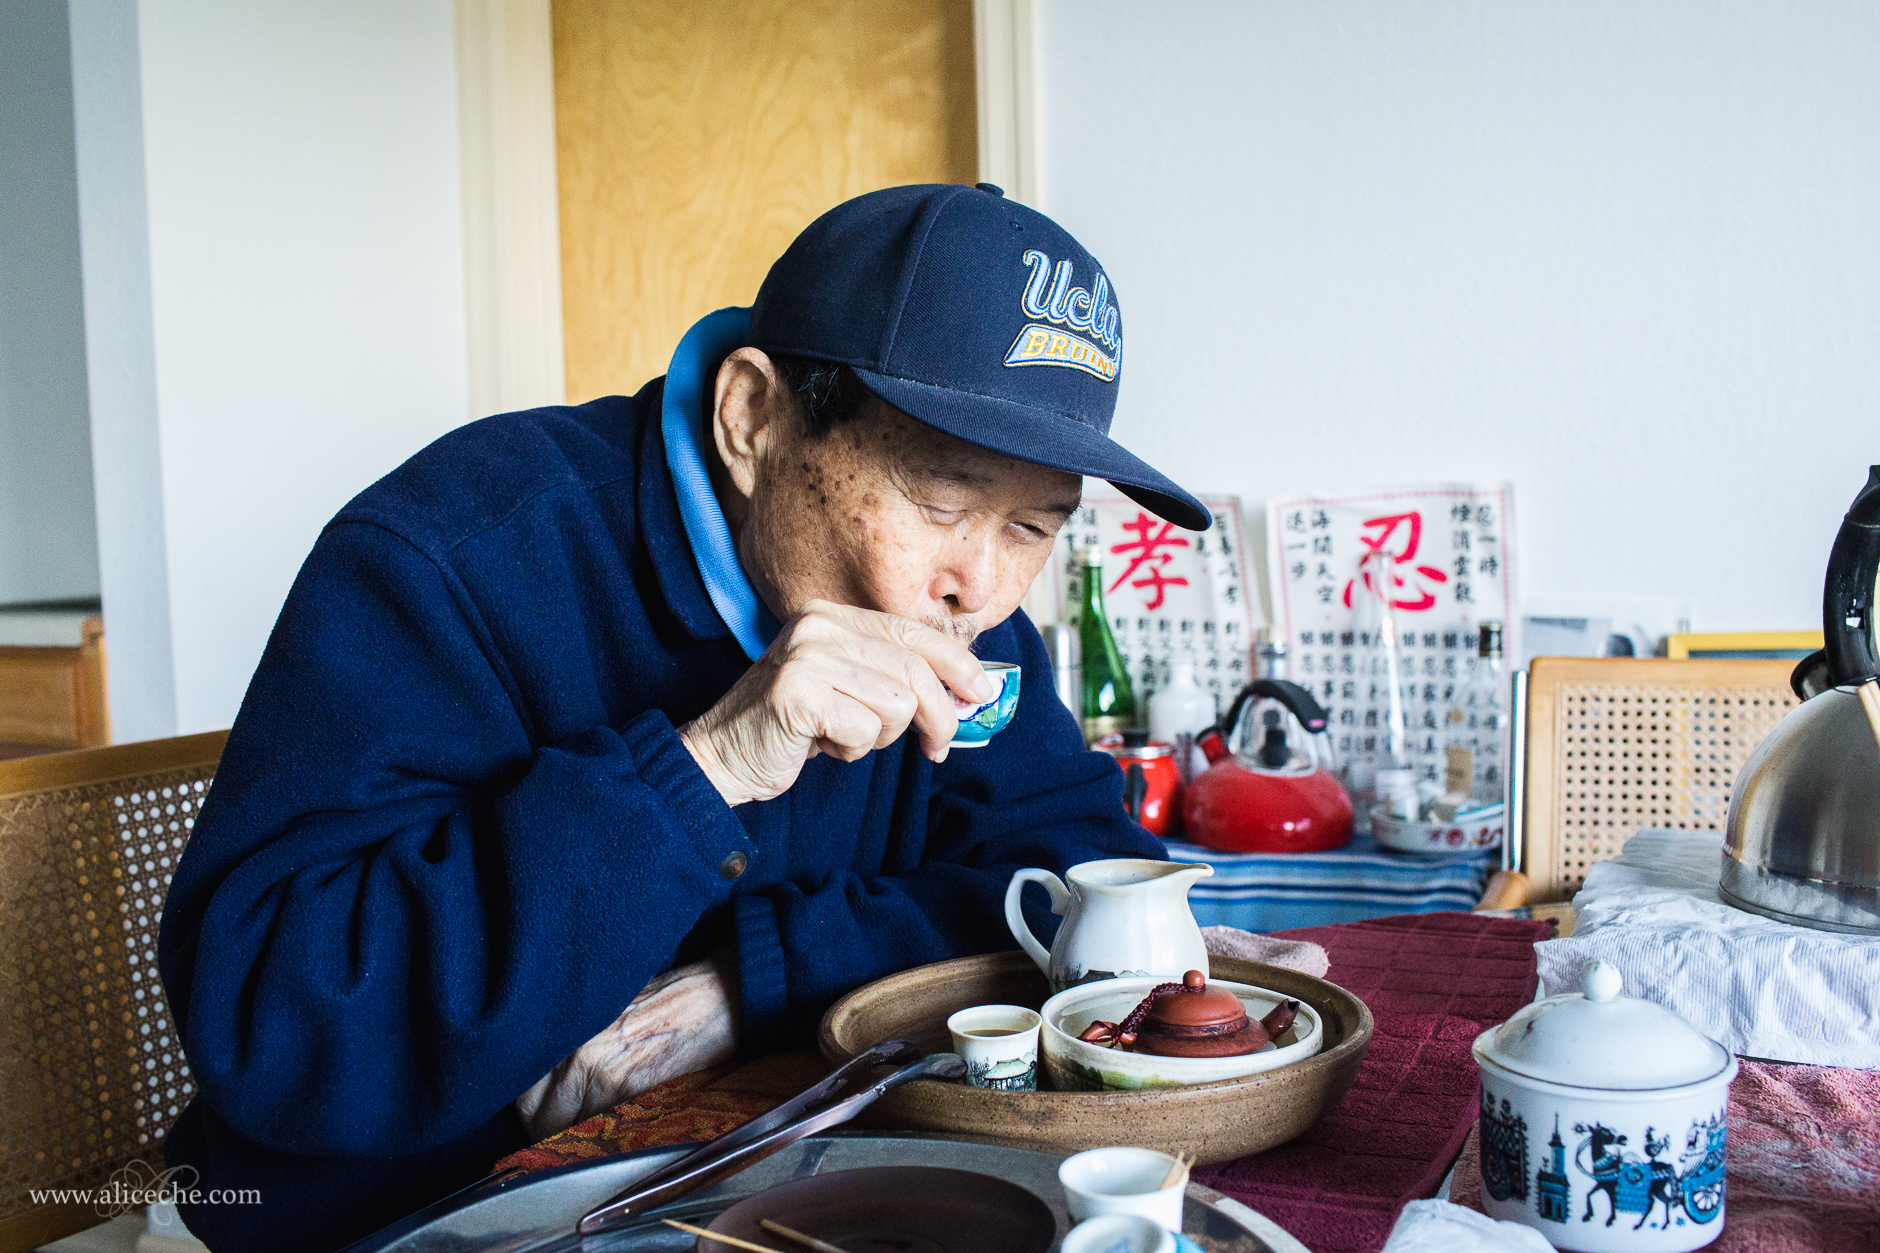 alice-che-photography-making-tea-with-grandpa-slurping-tea